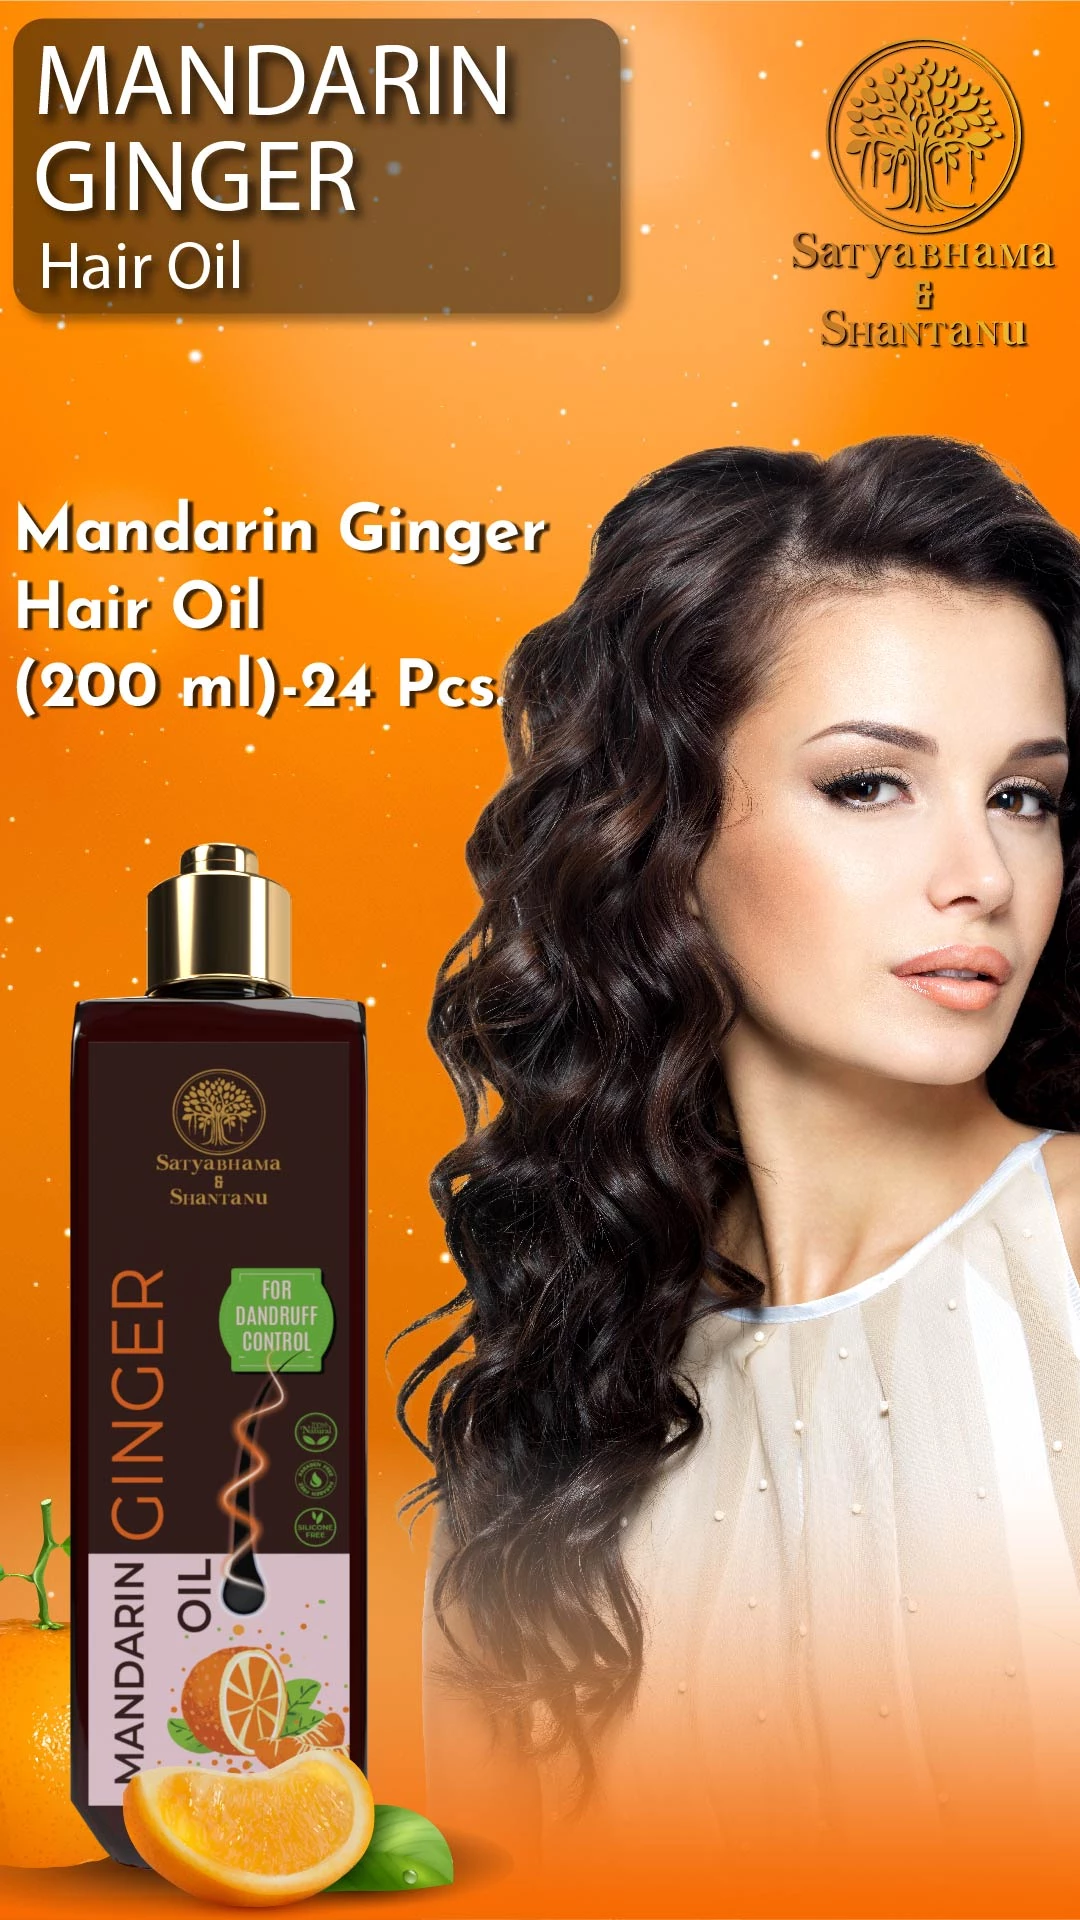 RBV B2B Mandarin Ginger Hair Oil (200 ml)-24 Pcs.